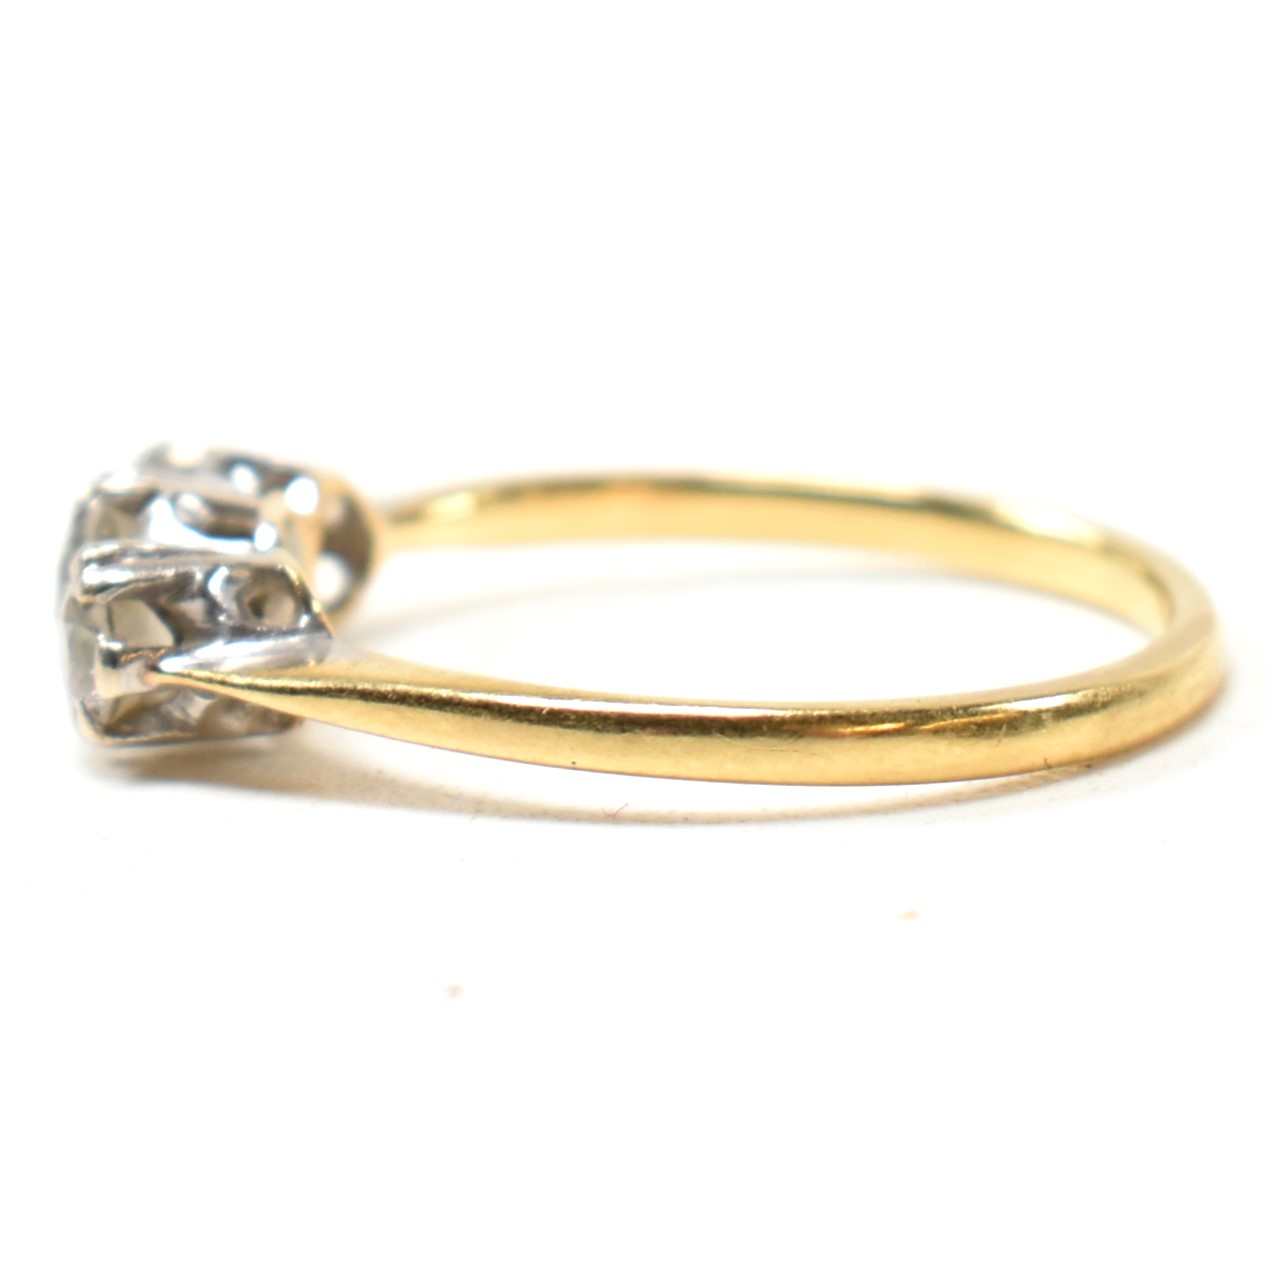 18CT GOLD & PLATINUM DIAMOND TRILOGY RING - Image 6 of 8